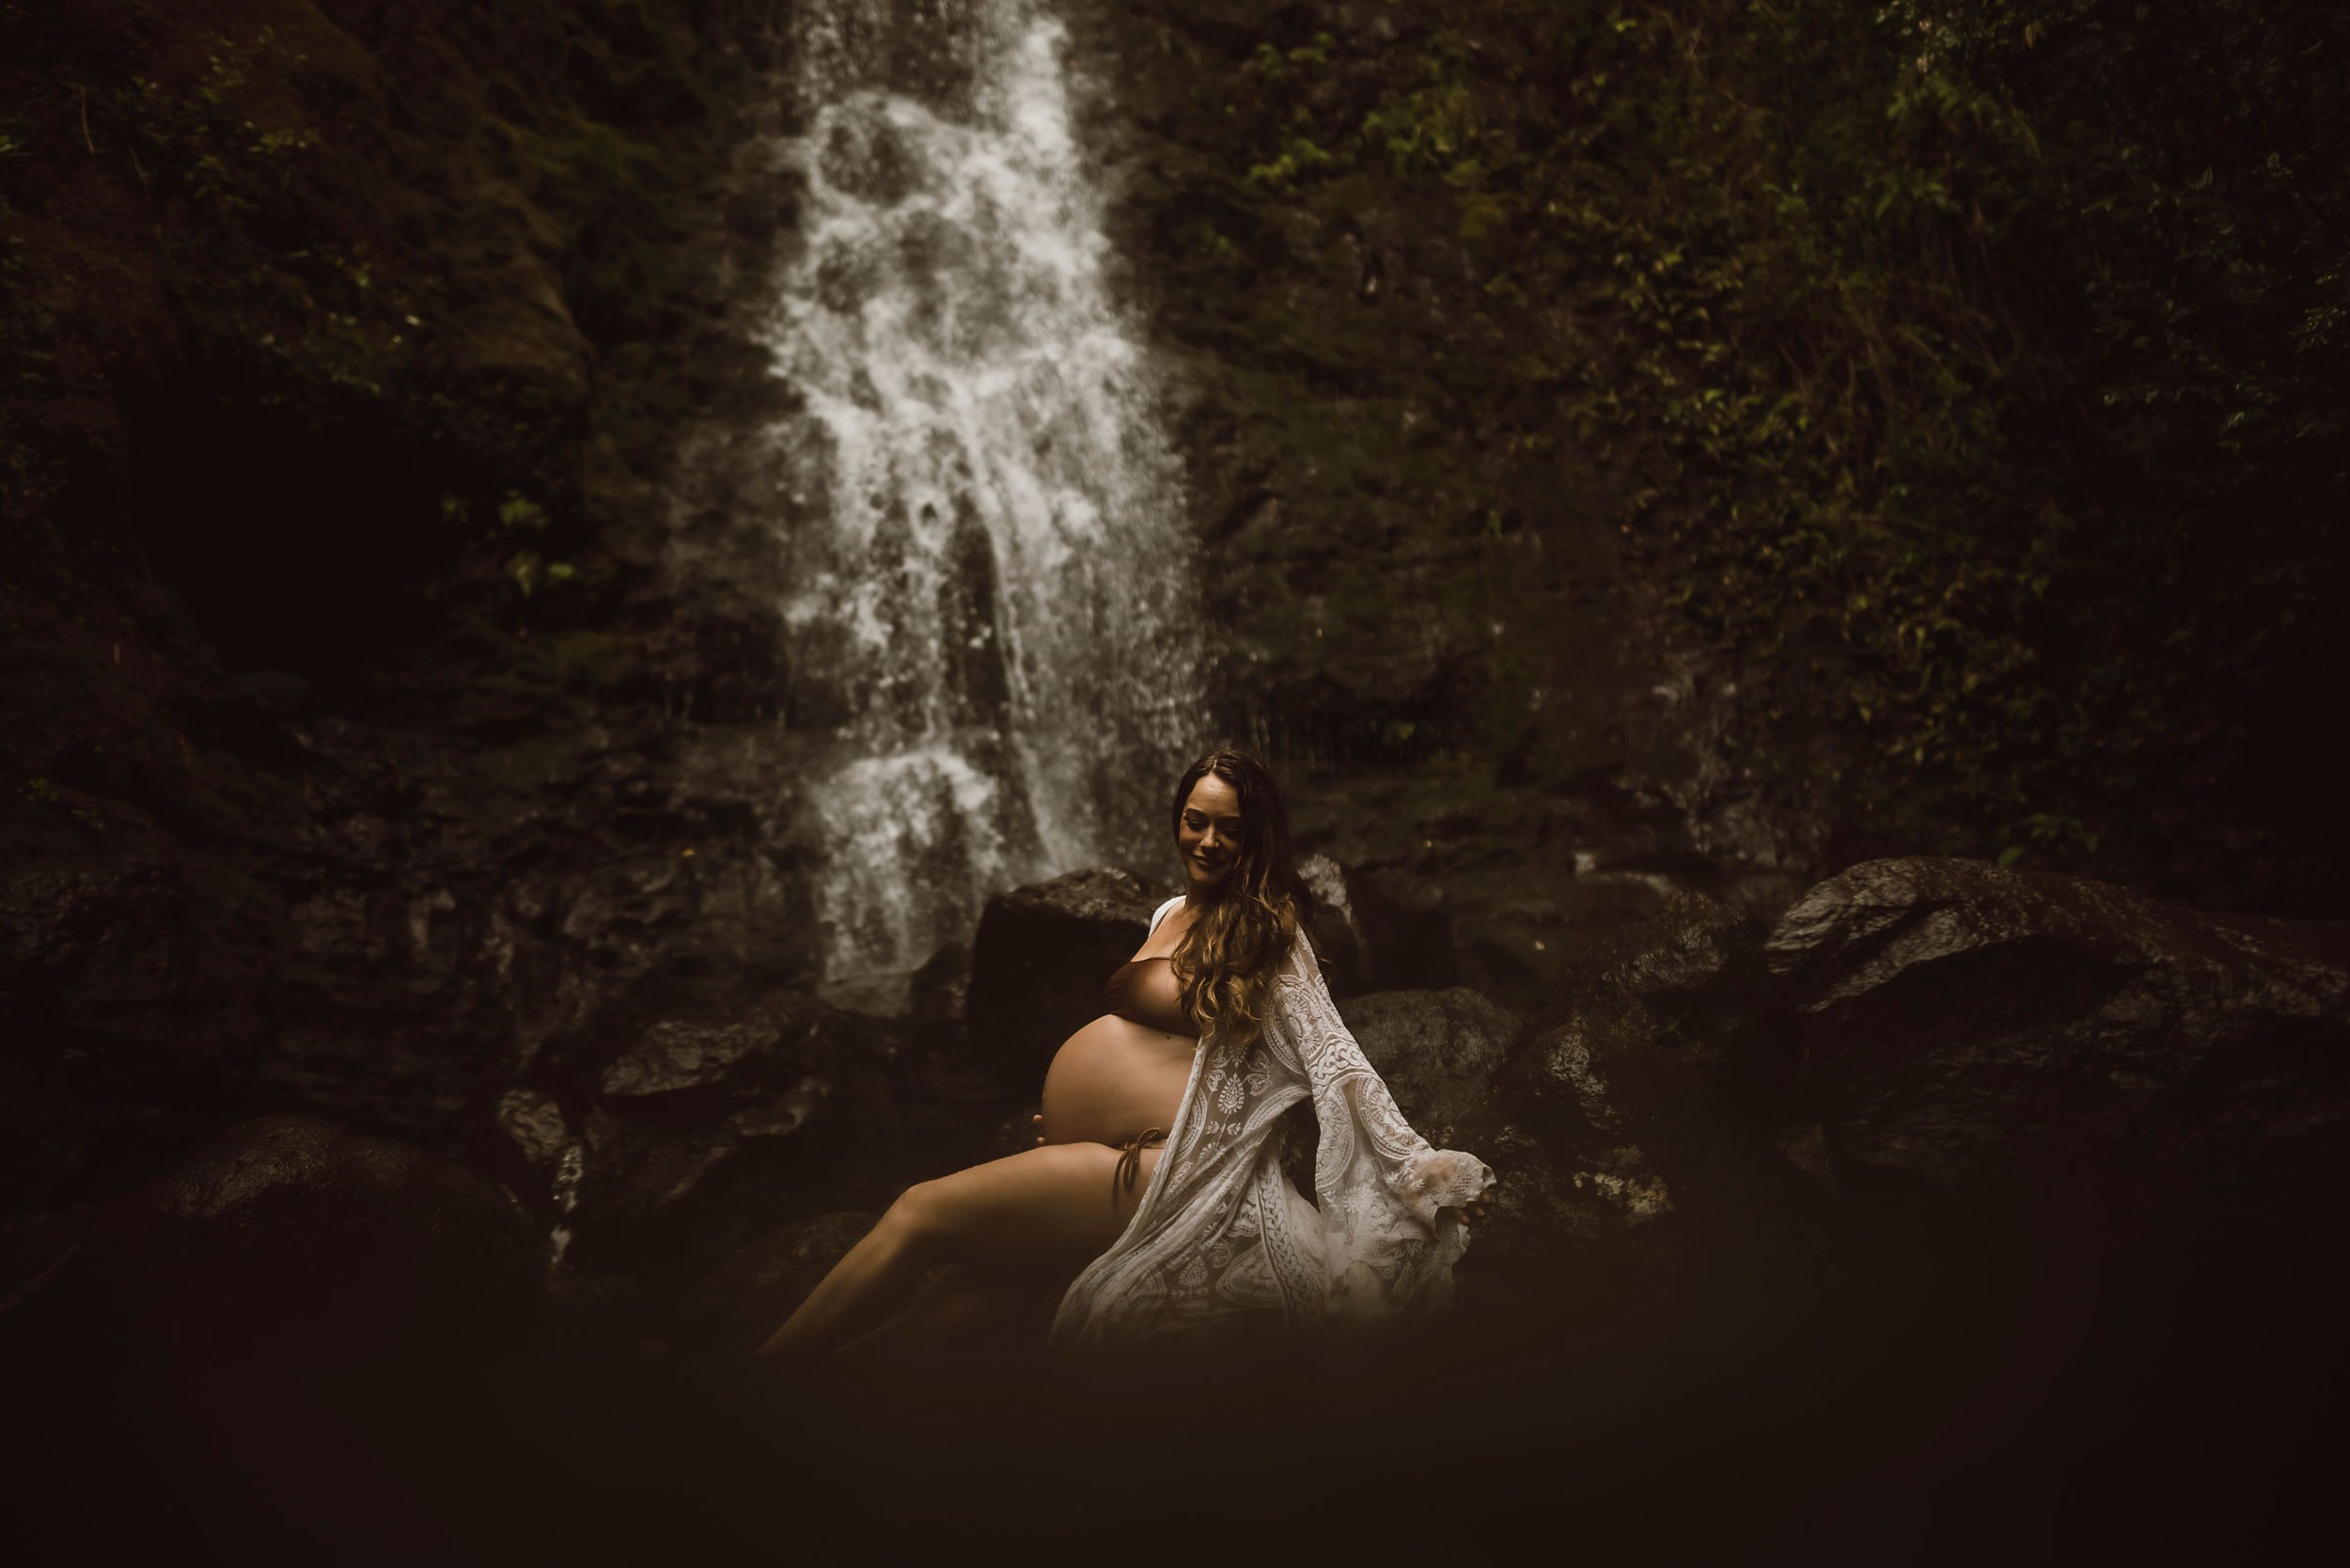 oahu-hawaii-waterfall-maternity-photos-lulumahu-07.jpg